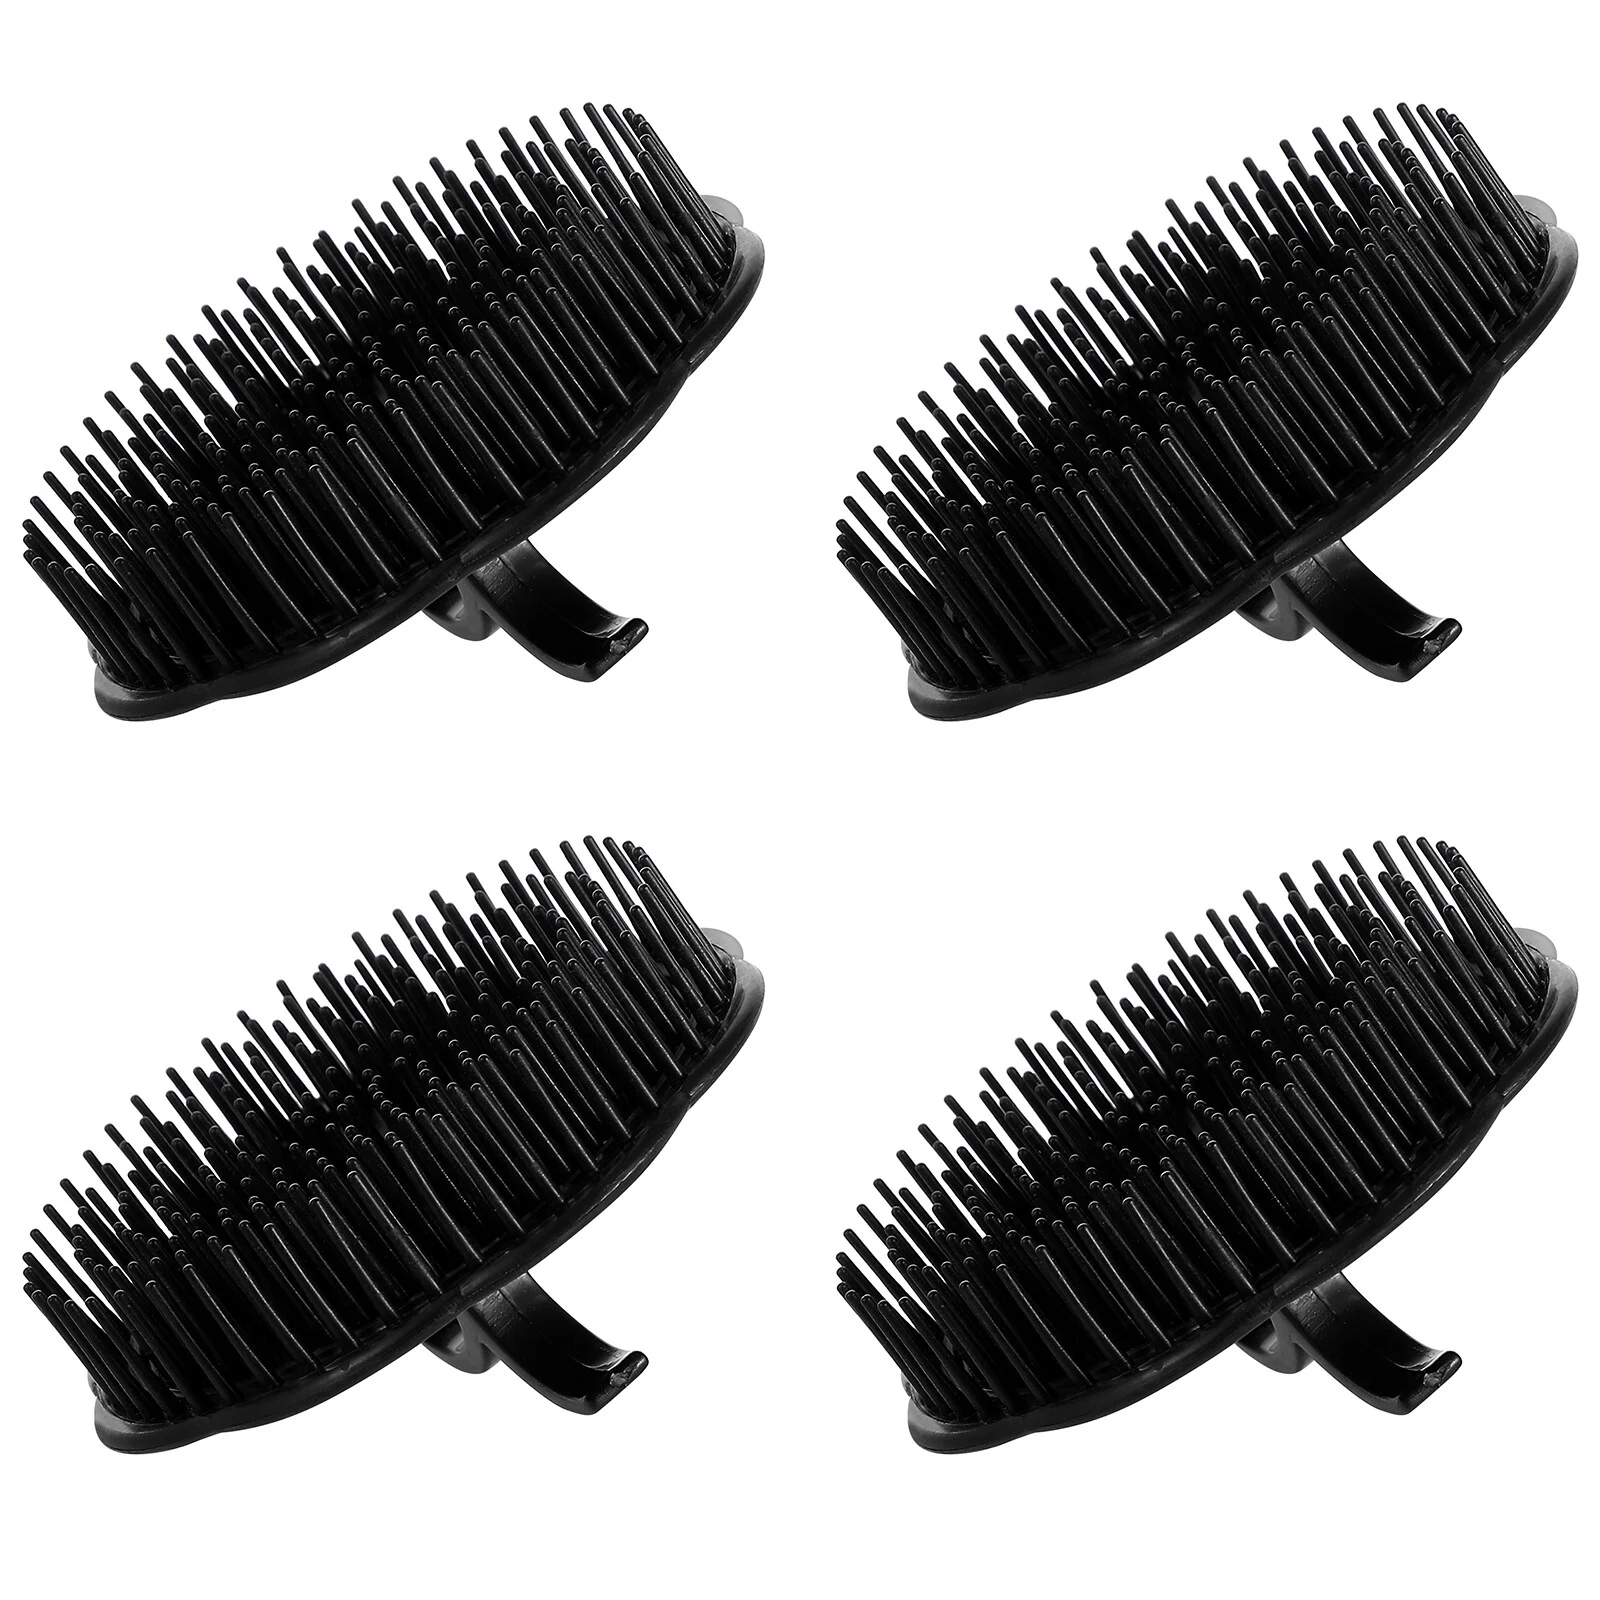 

Bath Brush Hair Comb Scalp Shampoo Anti-dandruff Mens Hairbrush